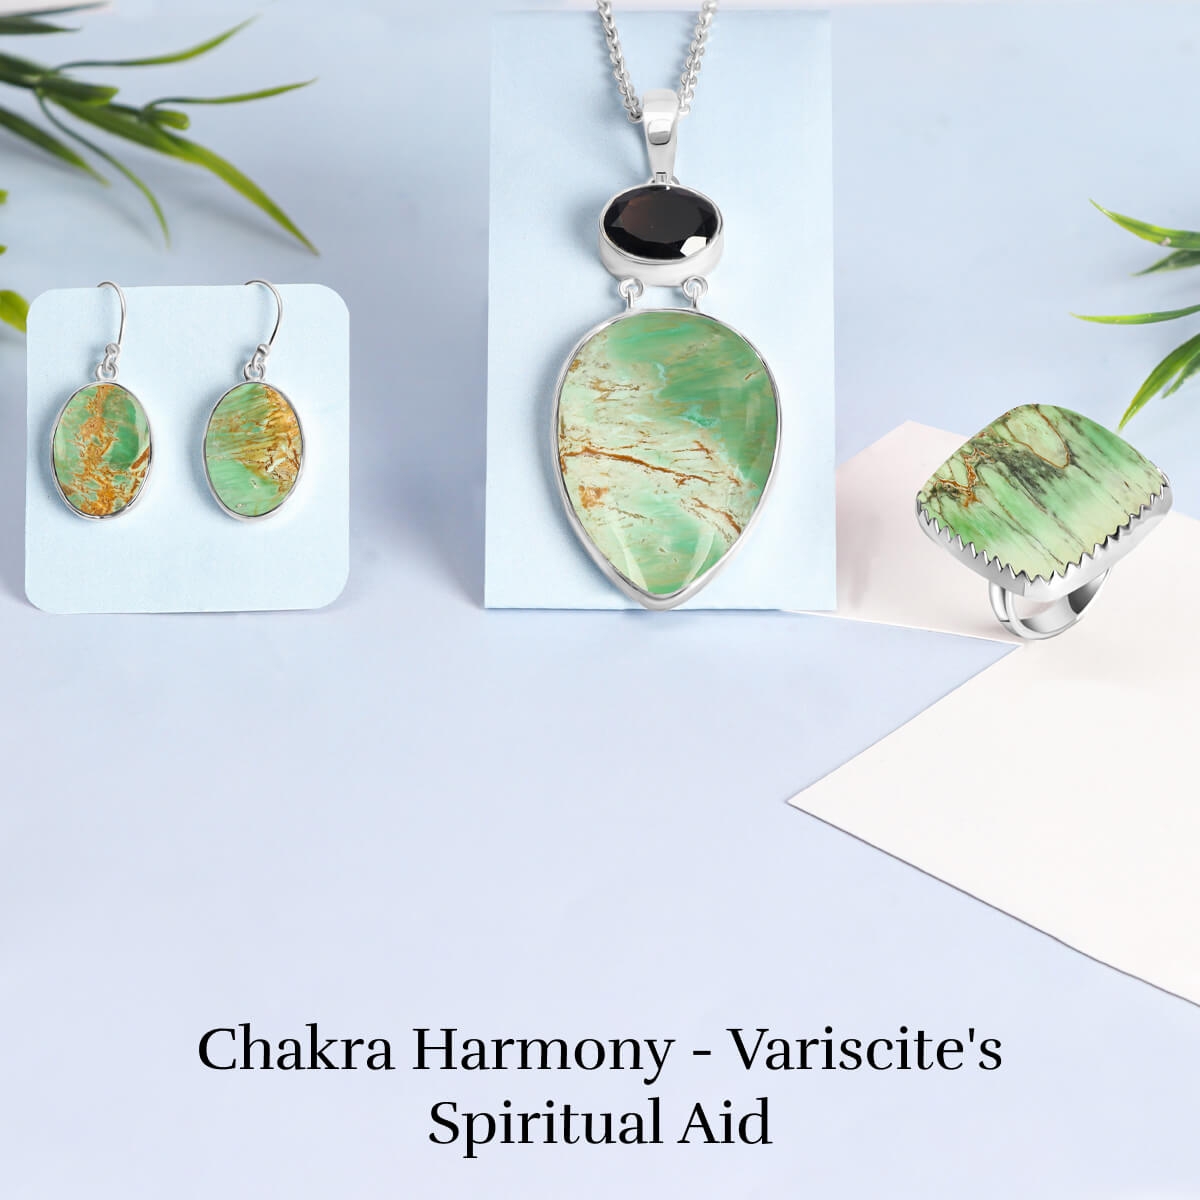 Variscite Gemstone Helps You Spiritually and Also Balances The Chakras